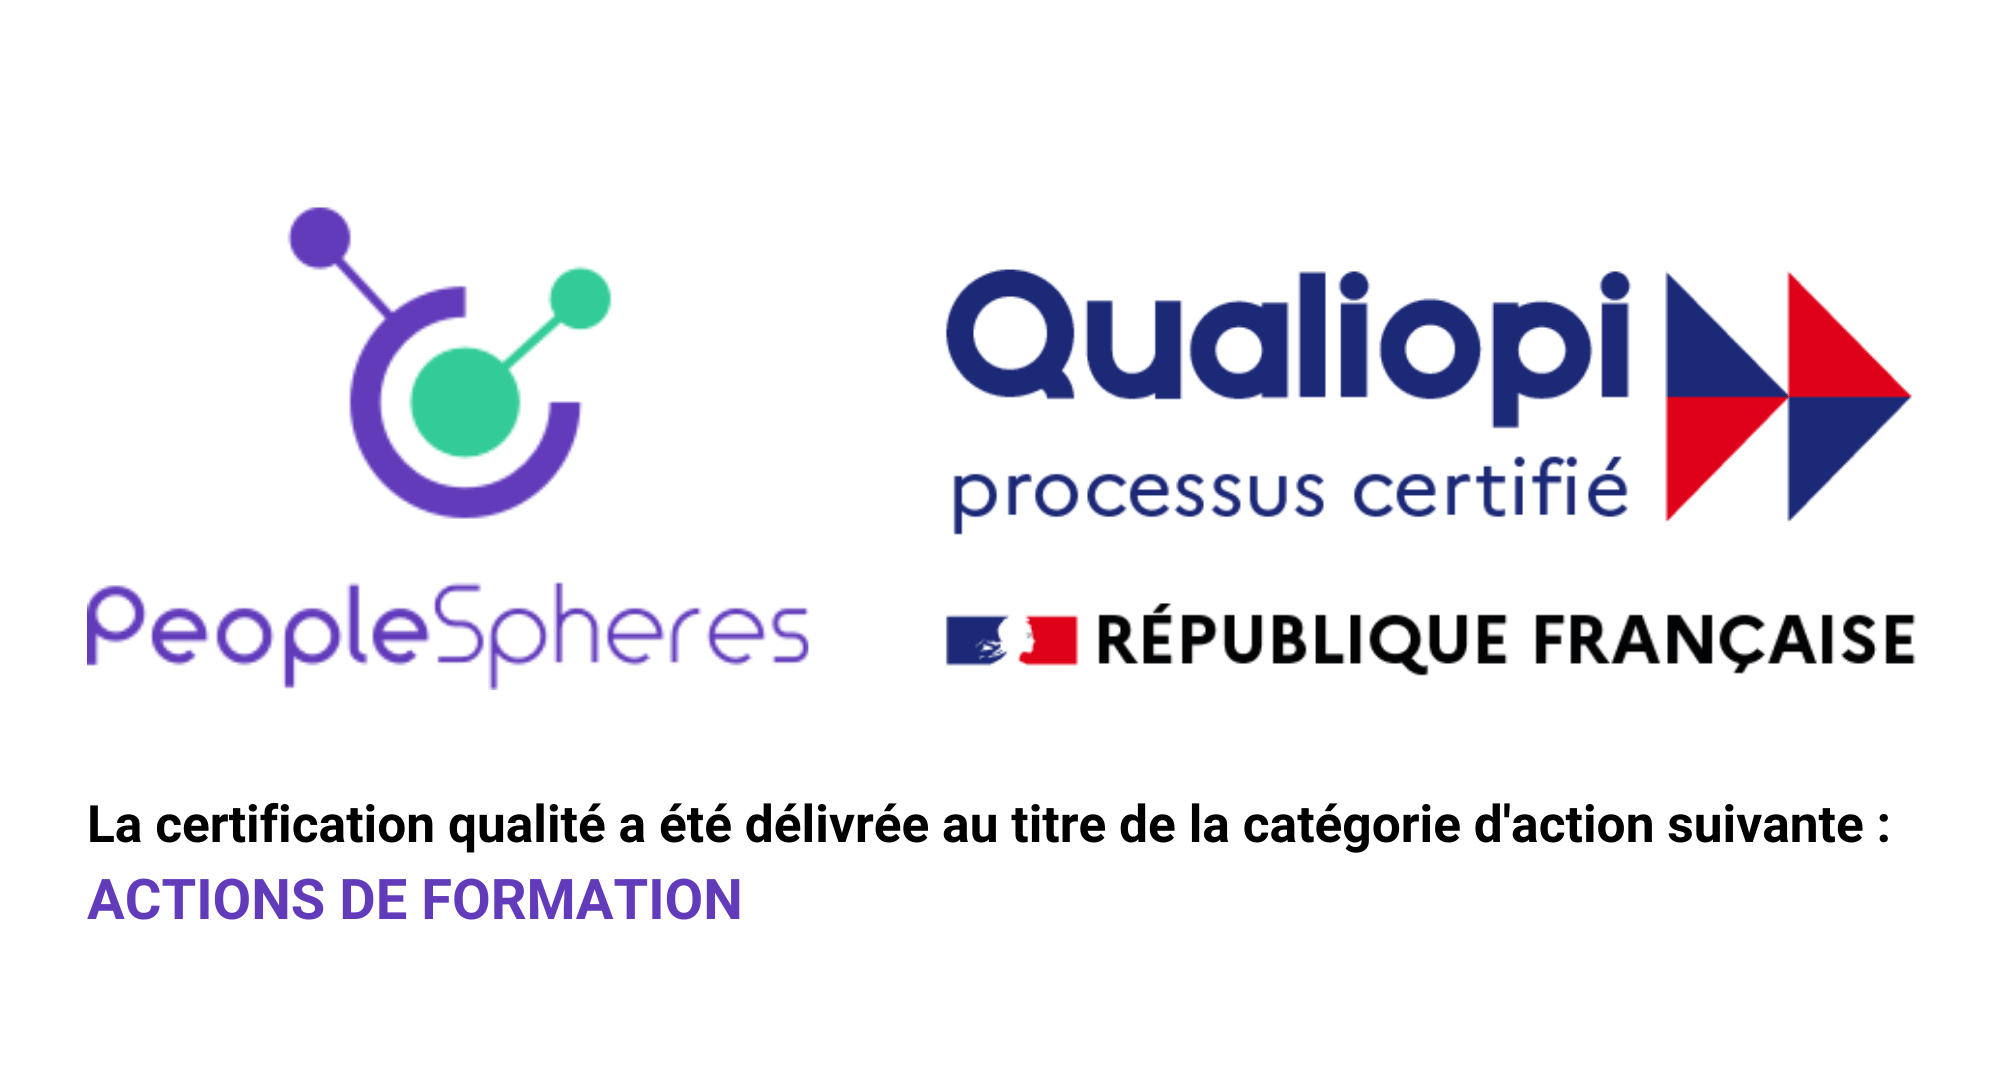 Certification Qualiopi PeopleSpheres